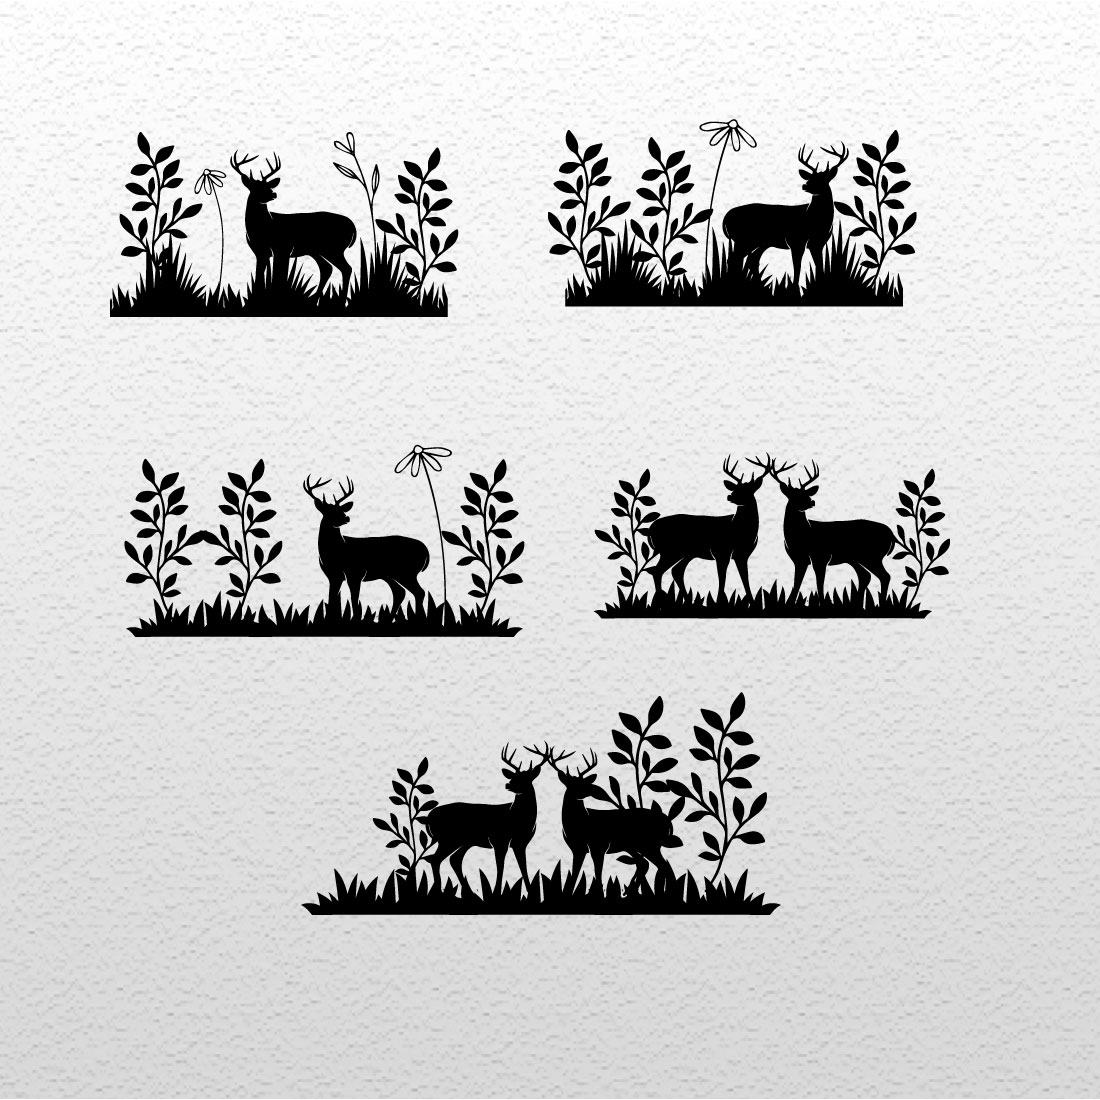 Christmas Deer Big Village cover image.